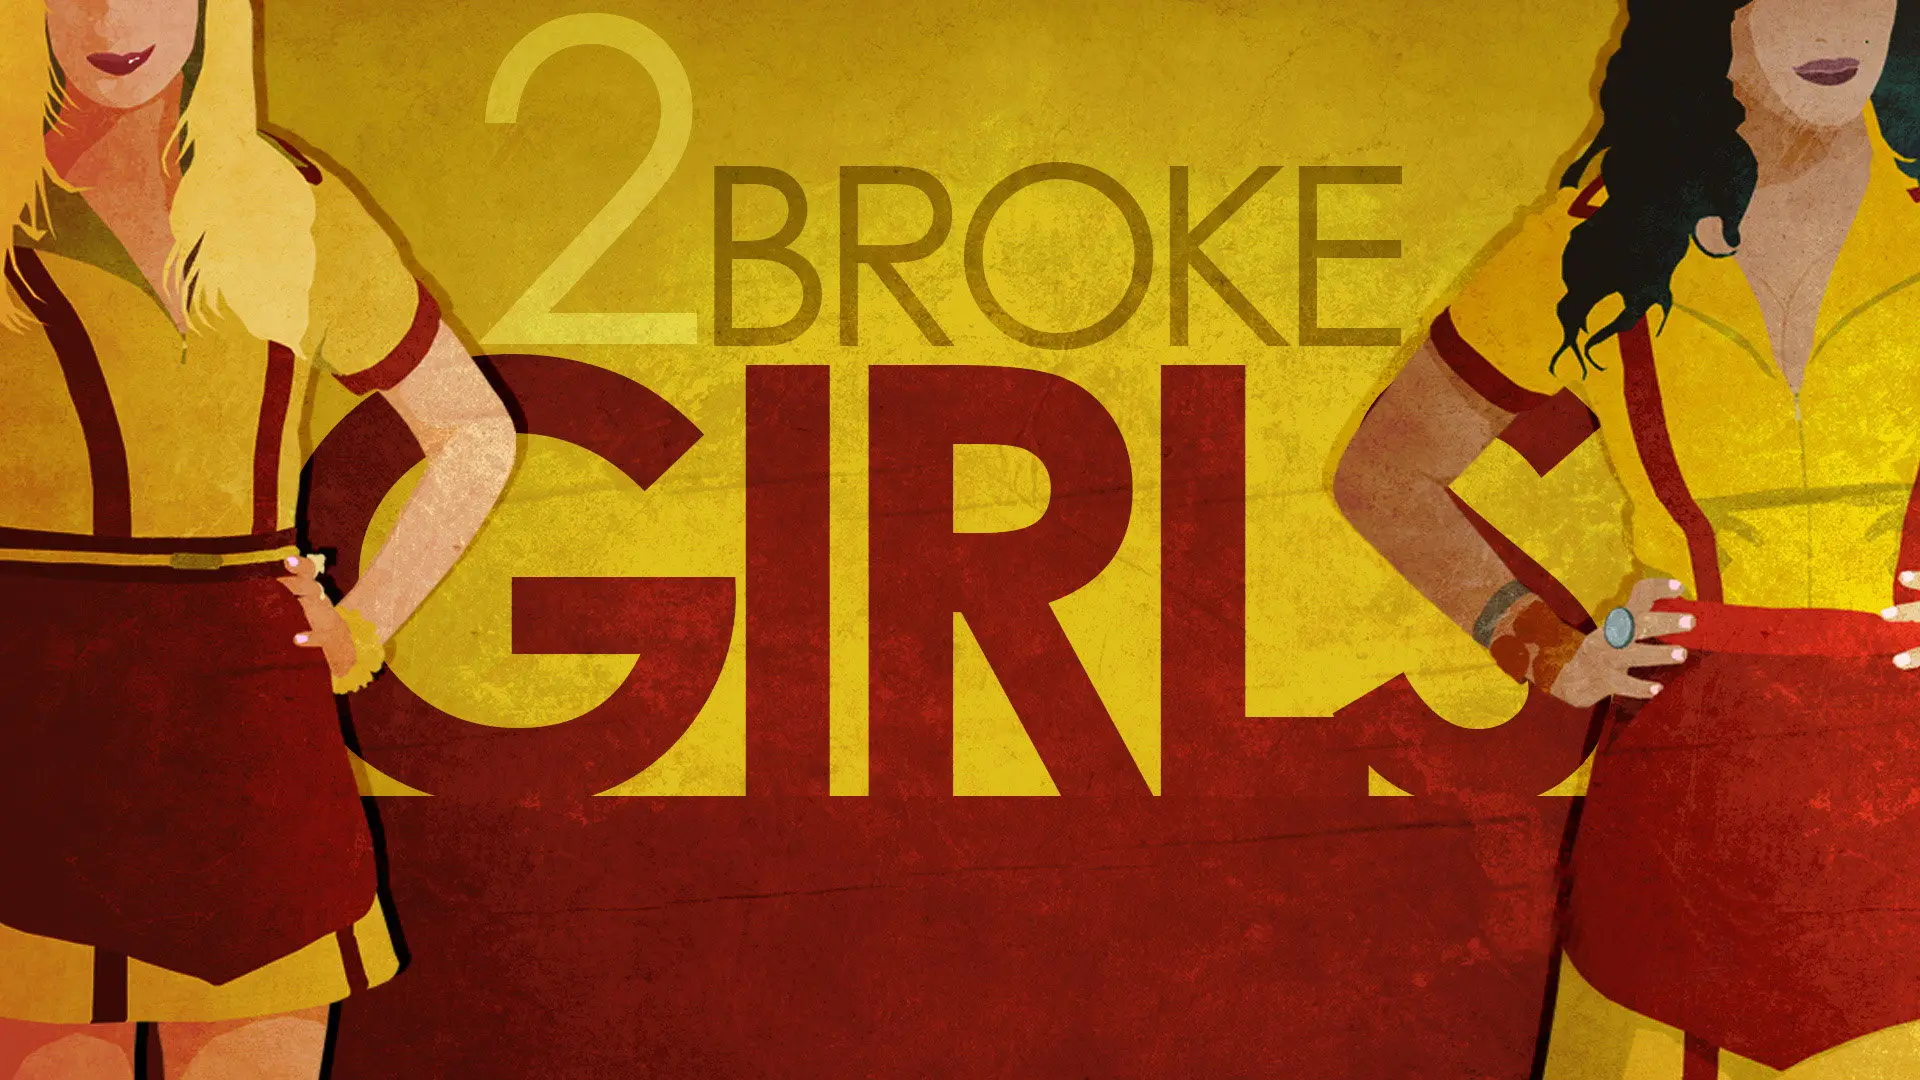 2 Broke Girls wallpaper 5